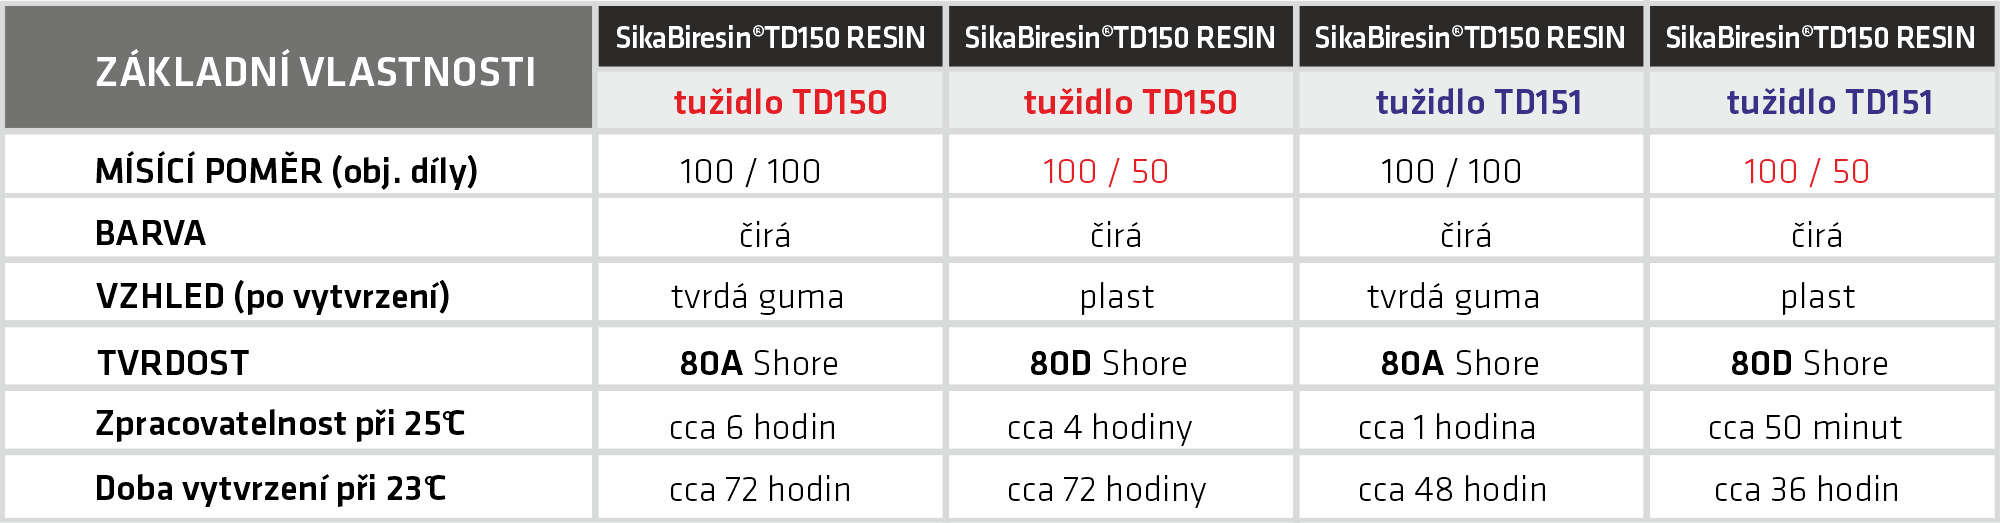 Vastnosti SikaBiresin TD150 a TD151 ( Translux )